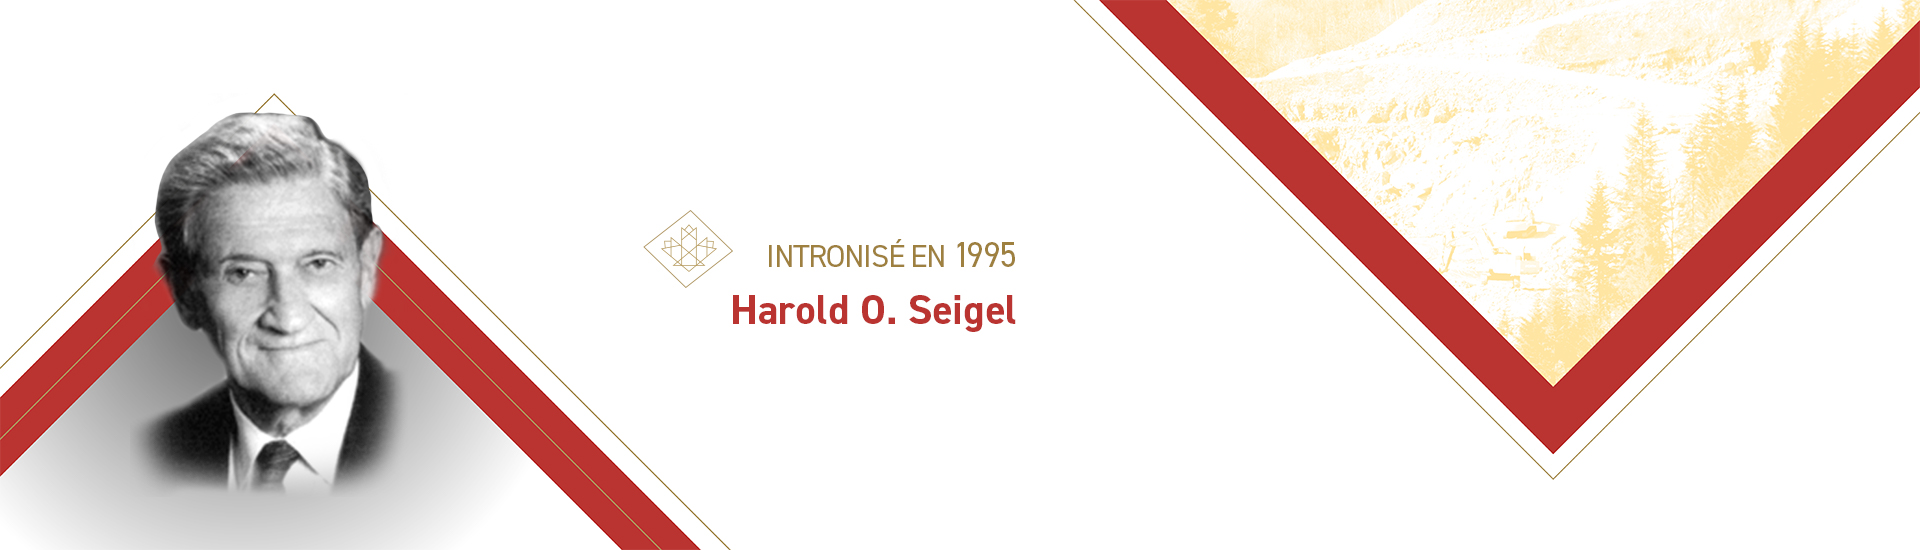 Harold O. Siegel (1924-2011)